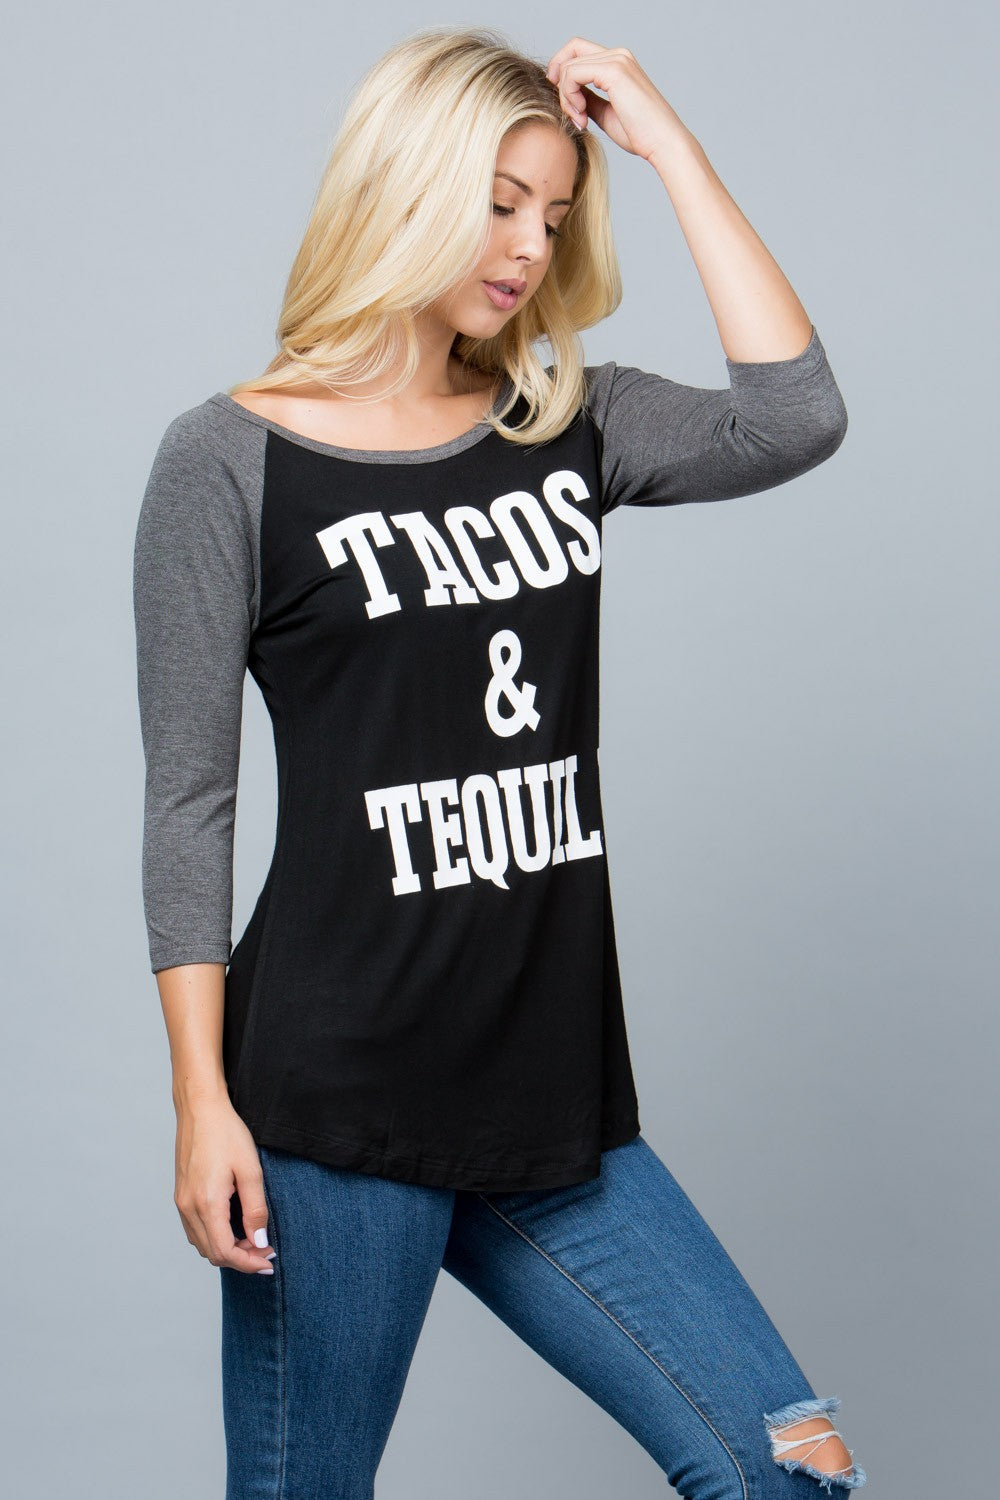 Tacos & Tequila Raglan Shirt